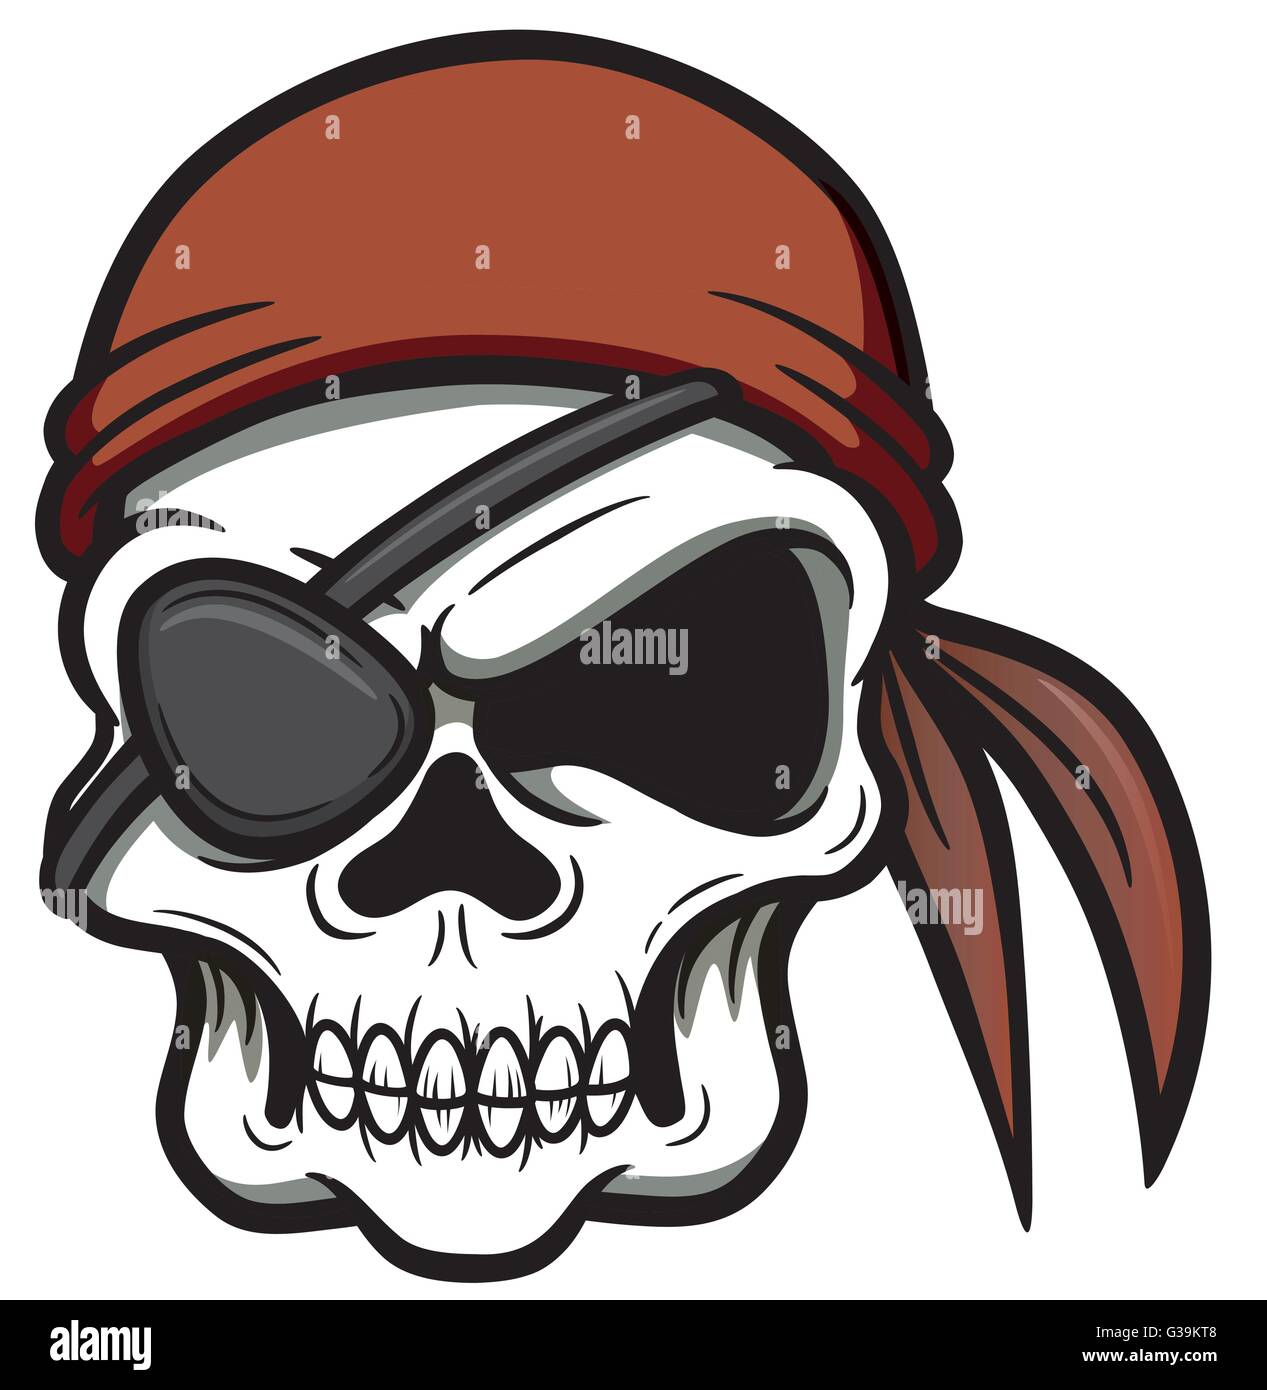 Vector illustration of Pirate skull Stock Vector